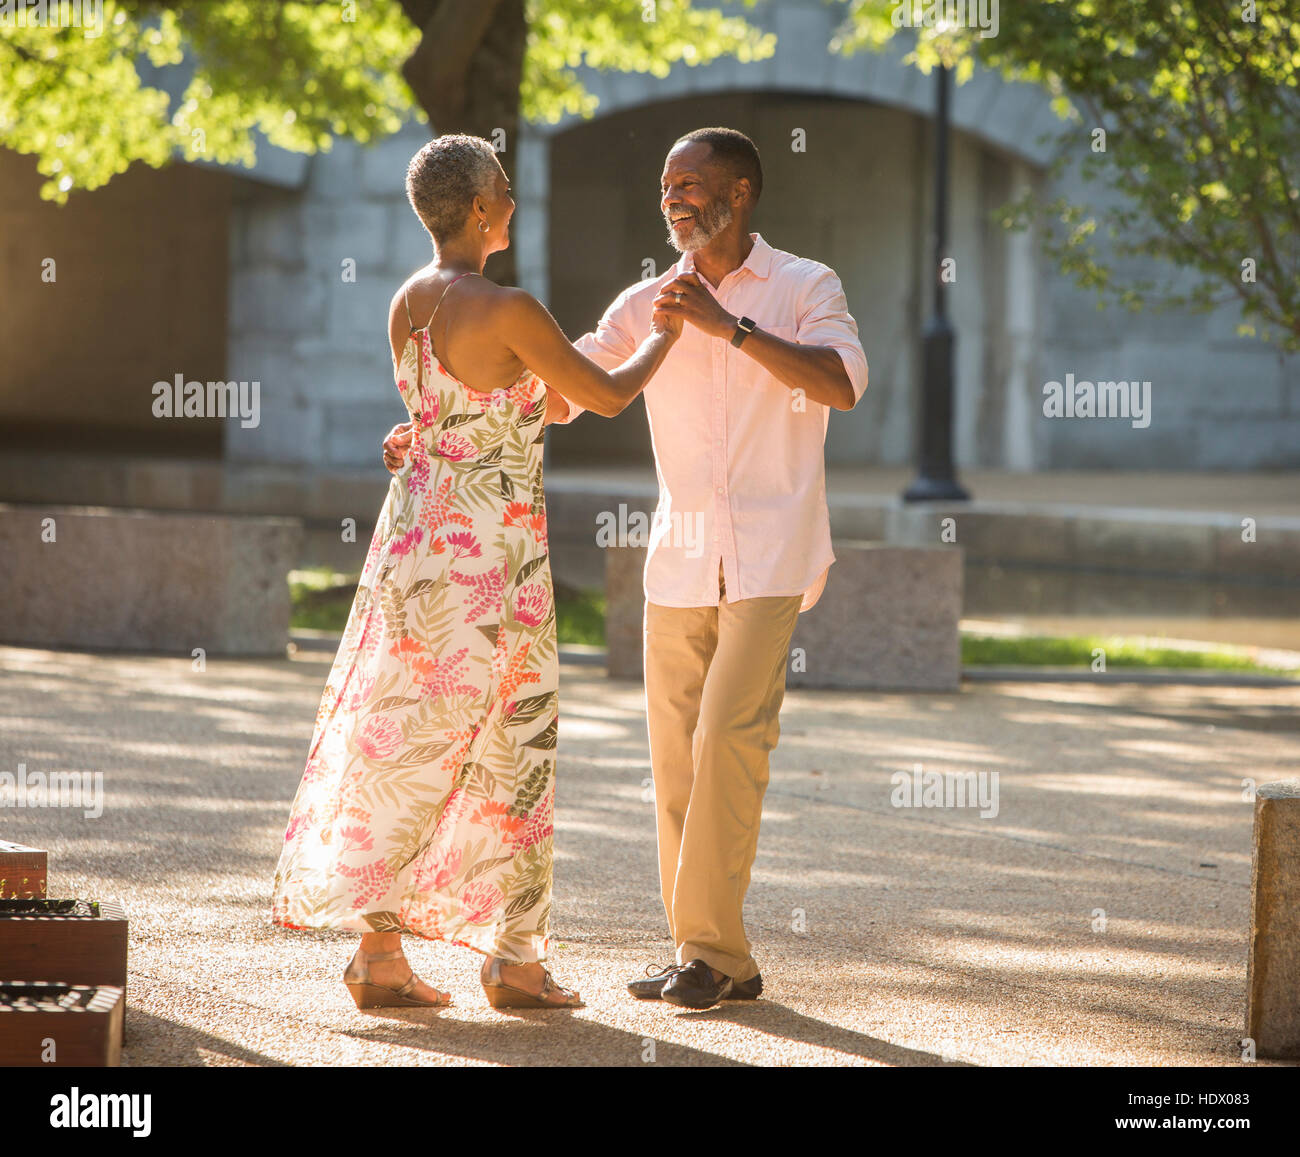 Black couple dancing in park Banque D'Images